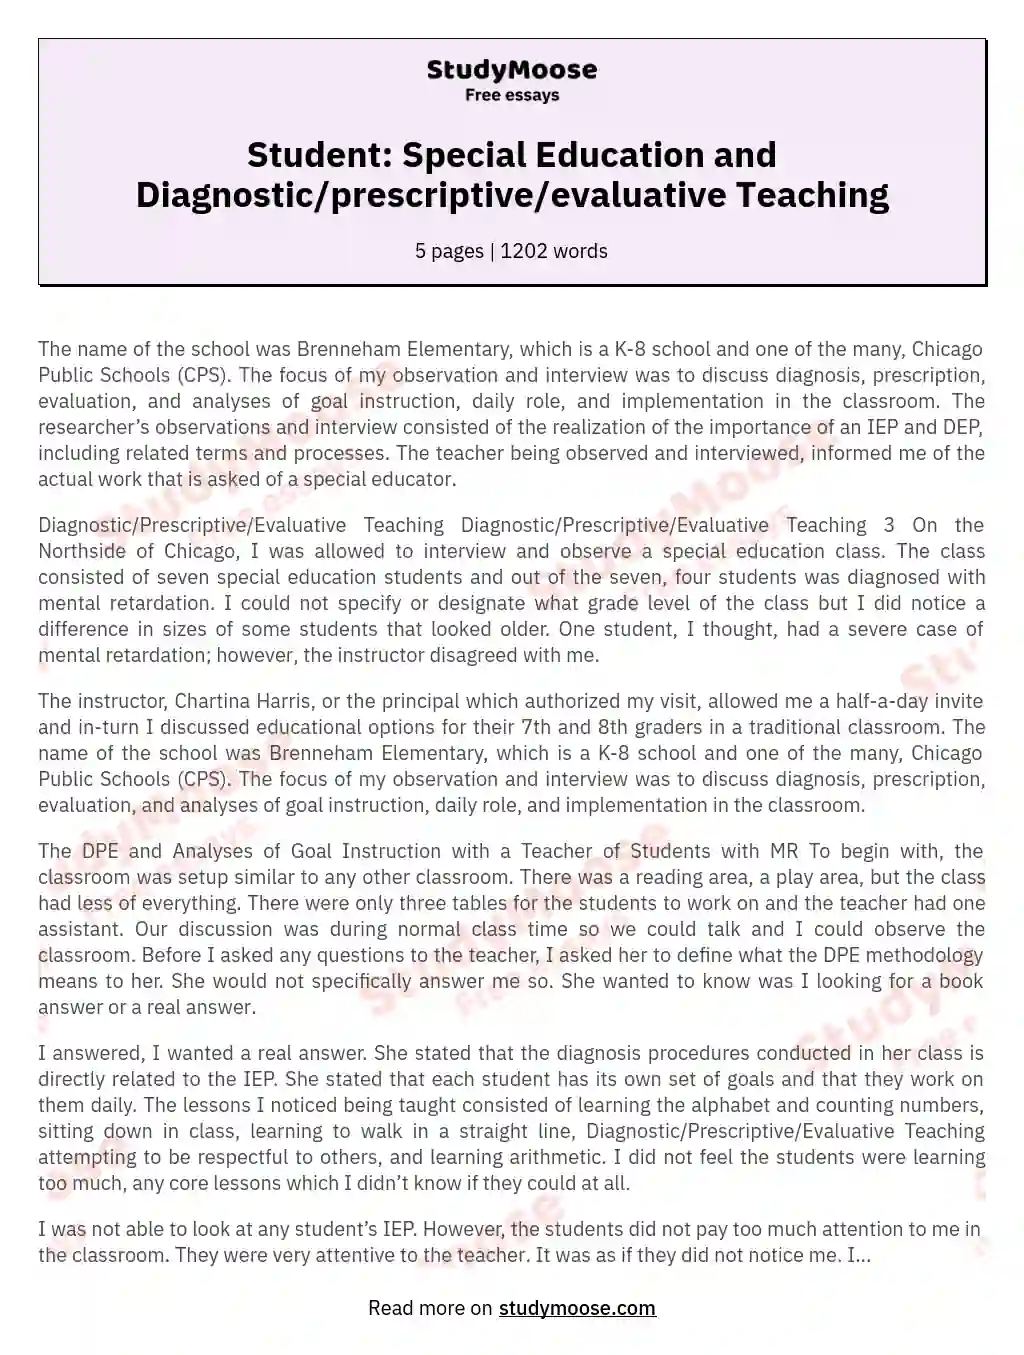 Student: Special Education and Diagnostic/prescriptive/evaluative Teaching